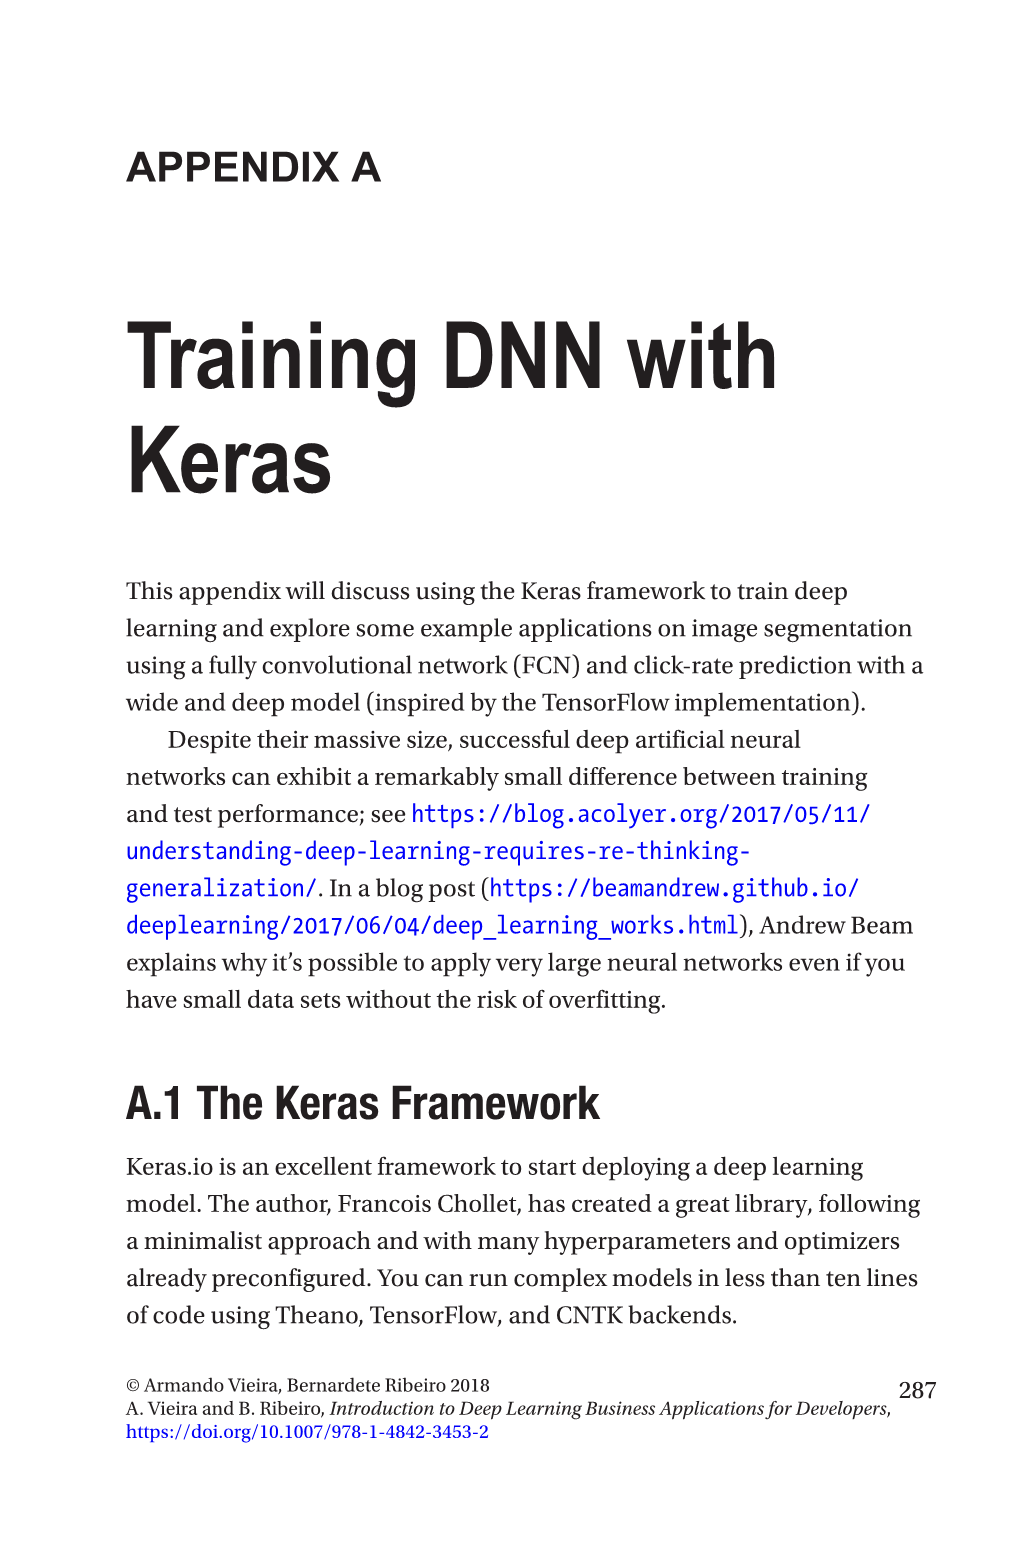 Training DNN with Keras